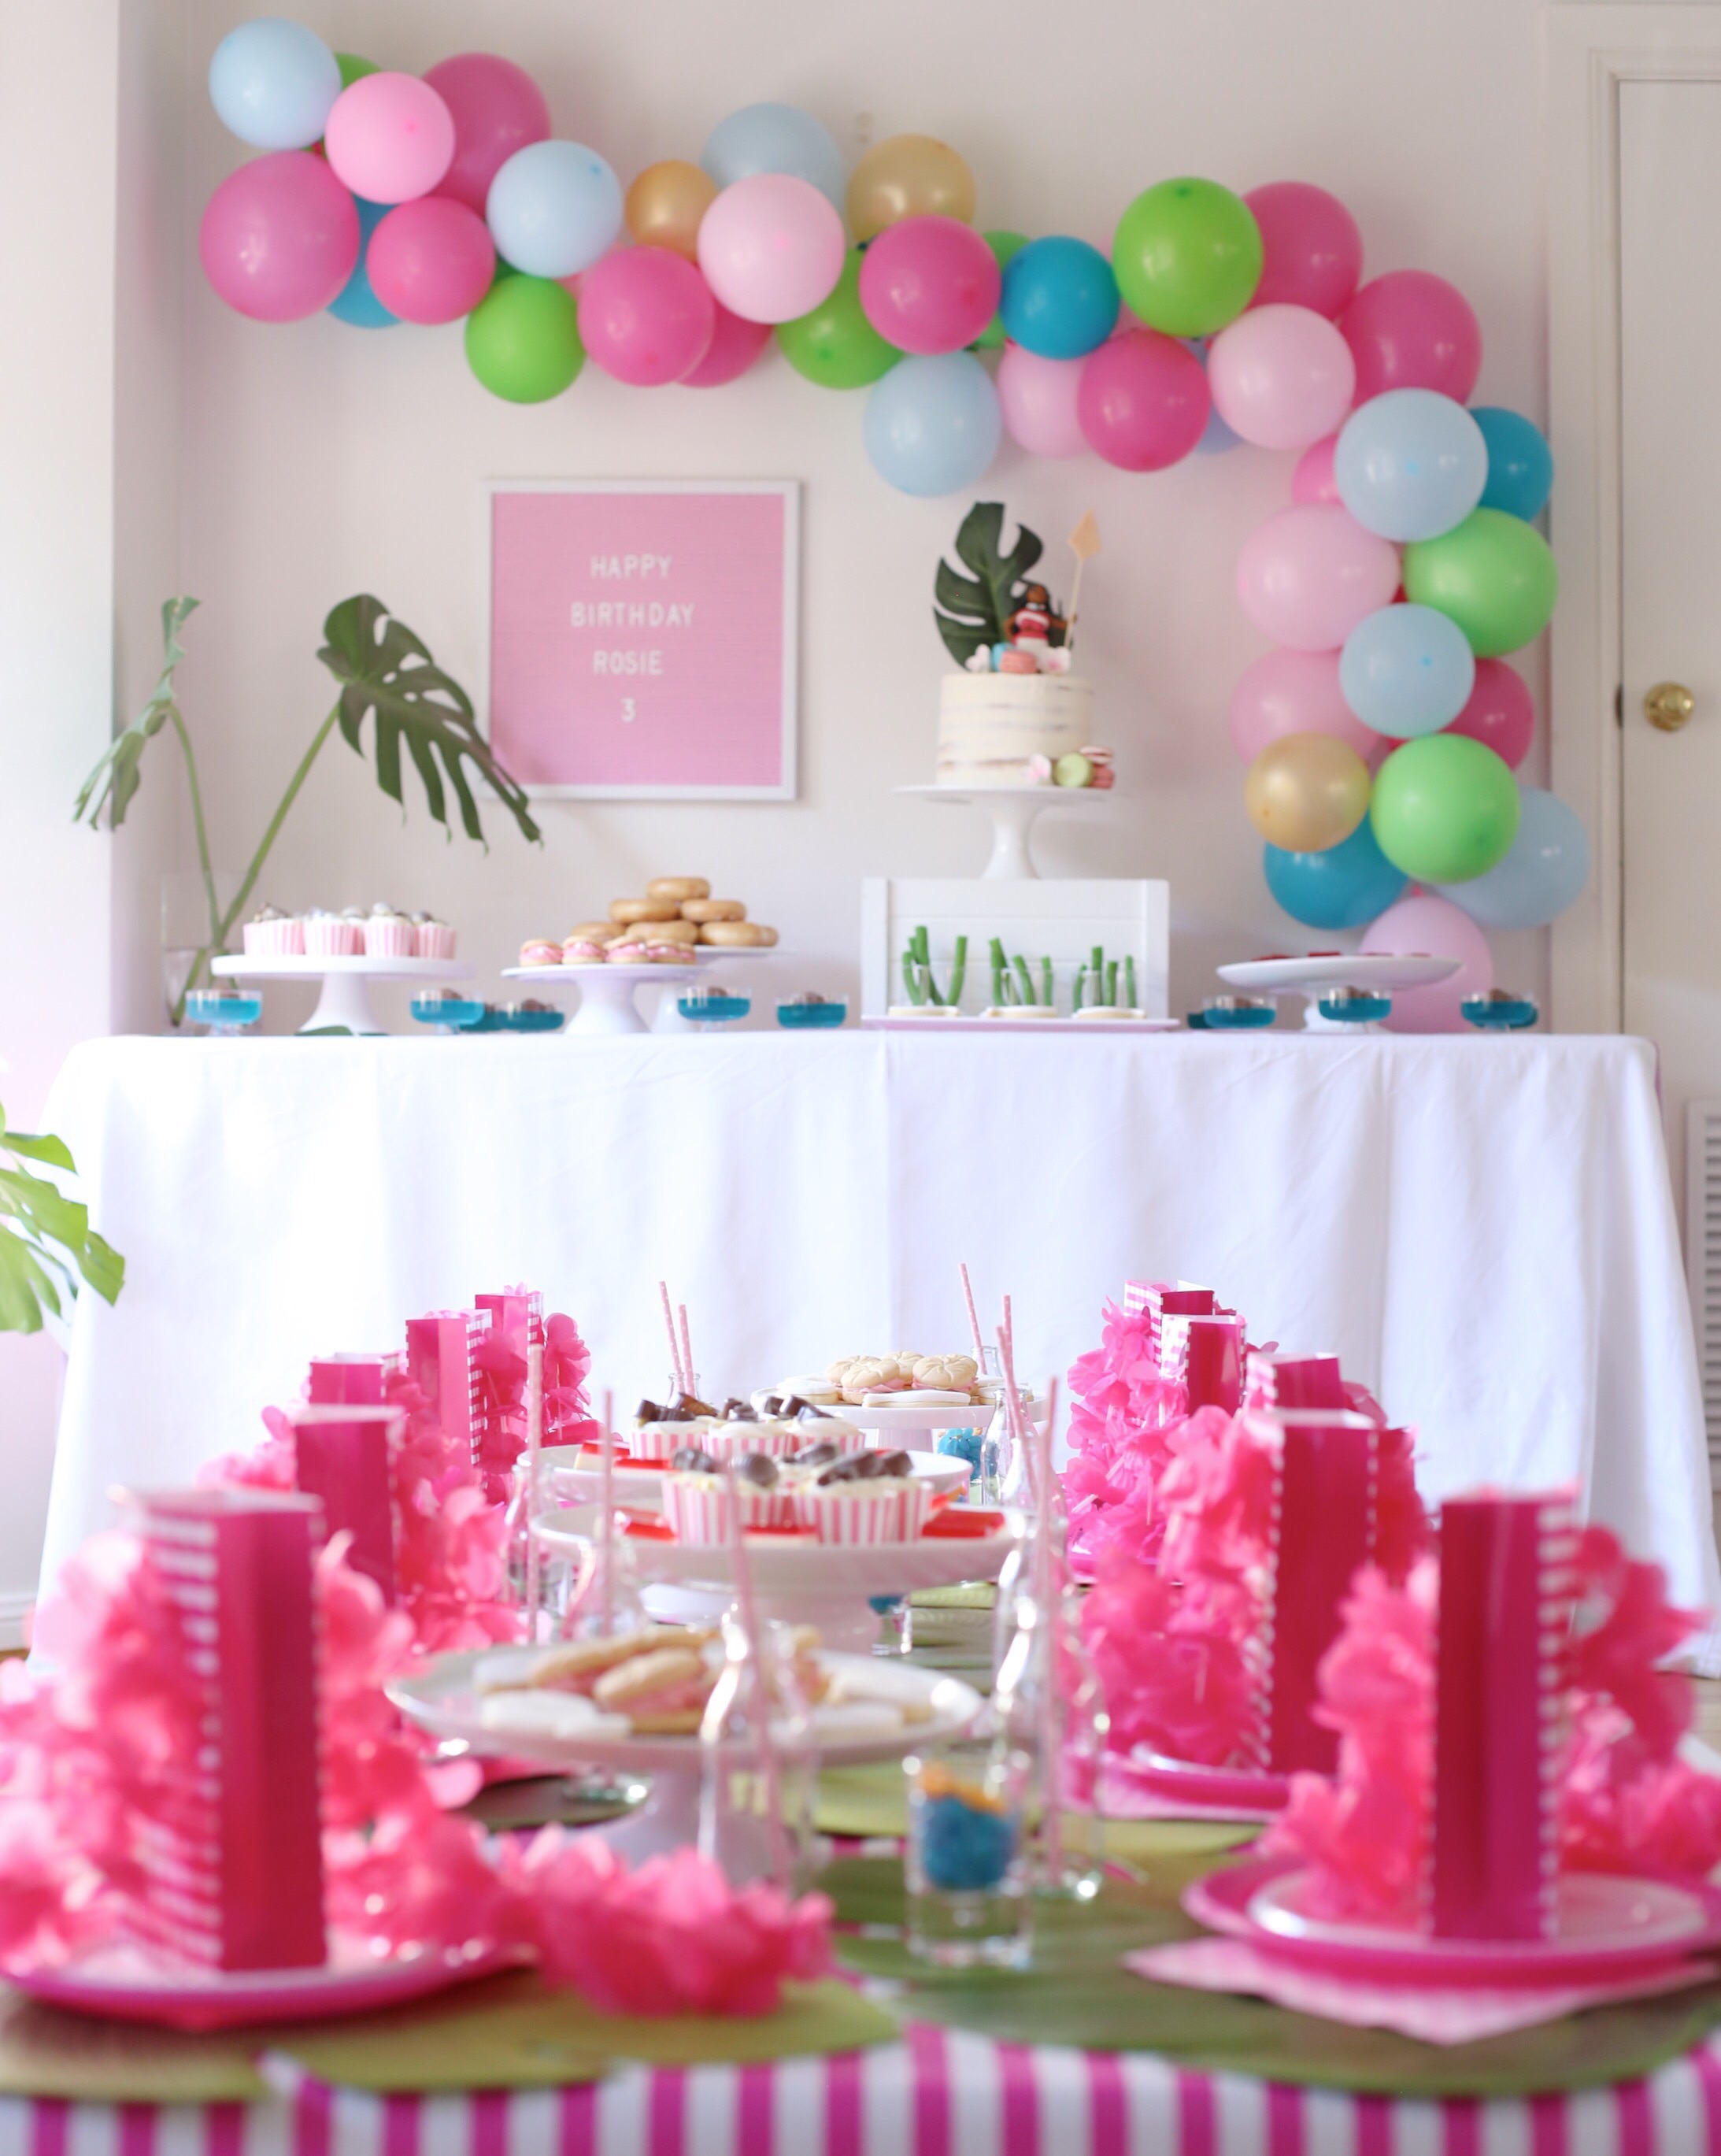 A pink Moana party